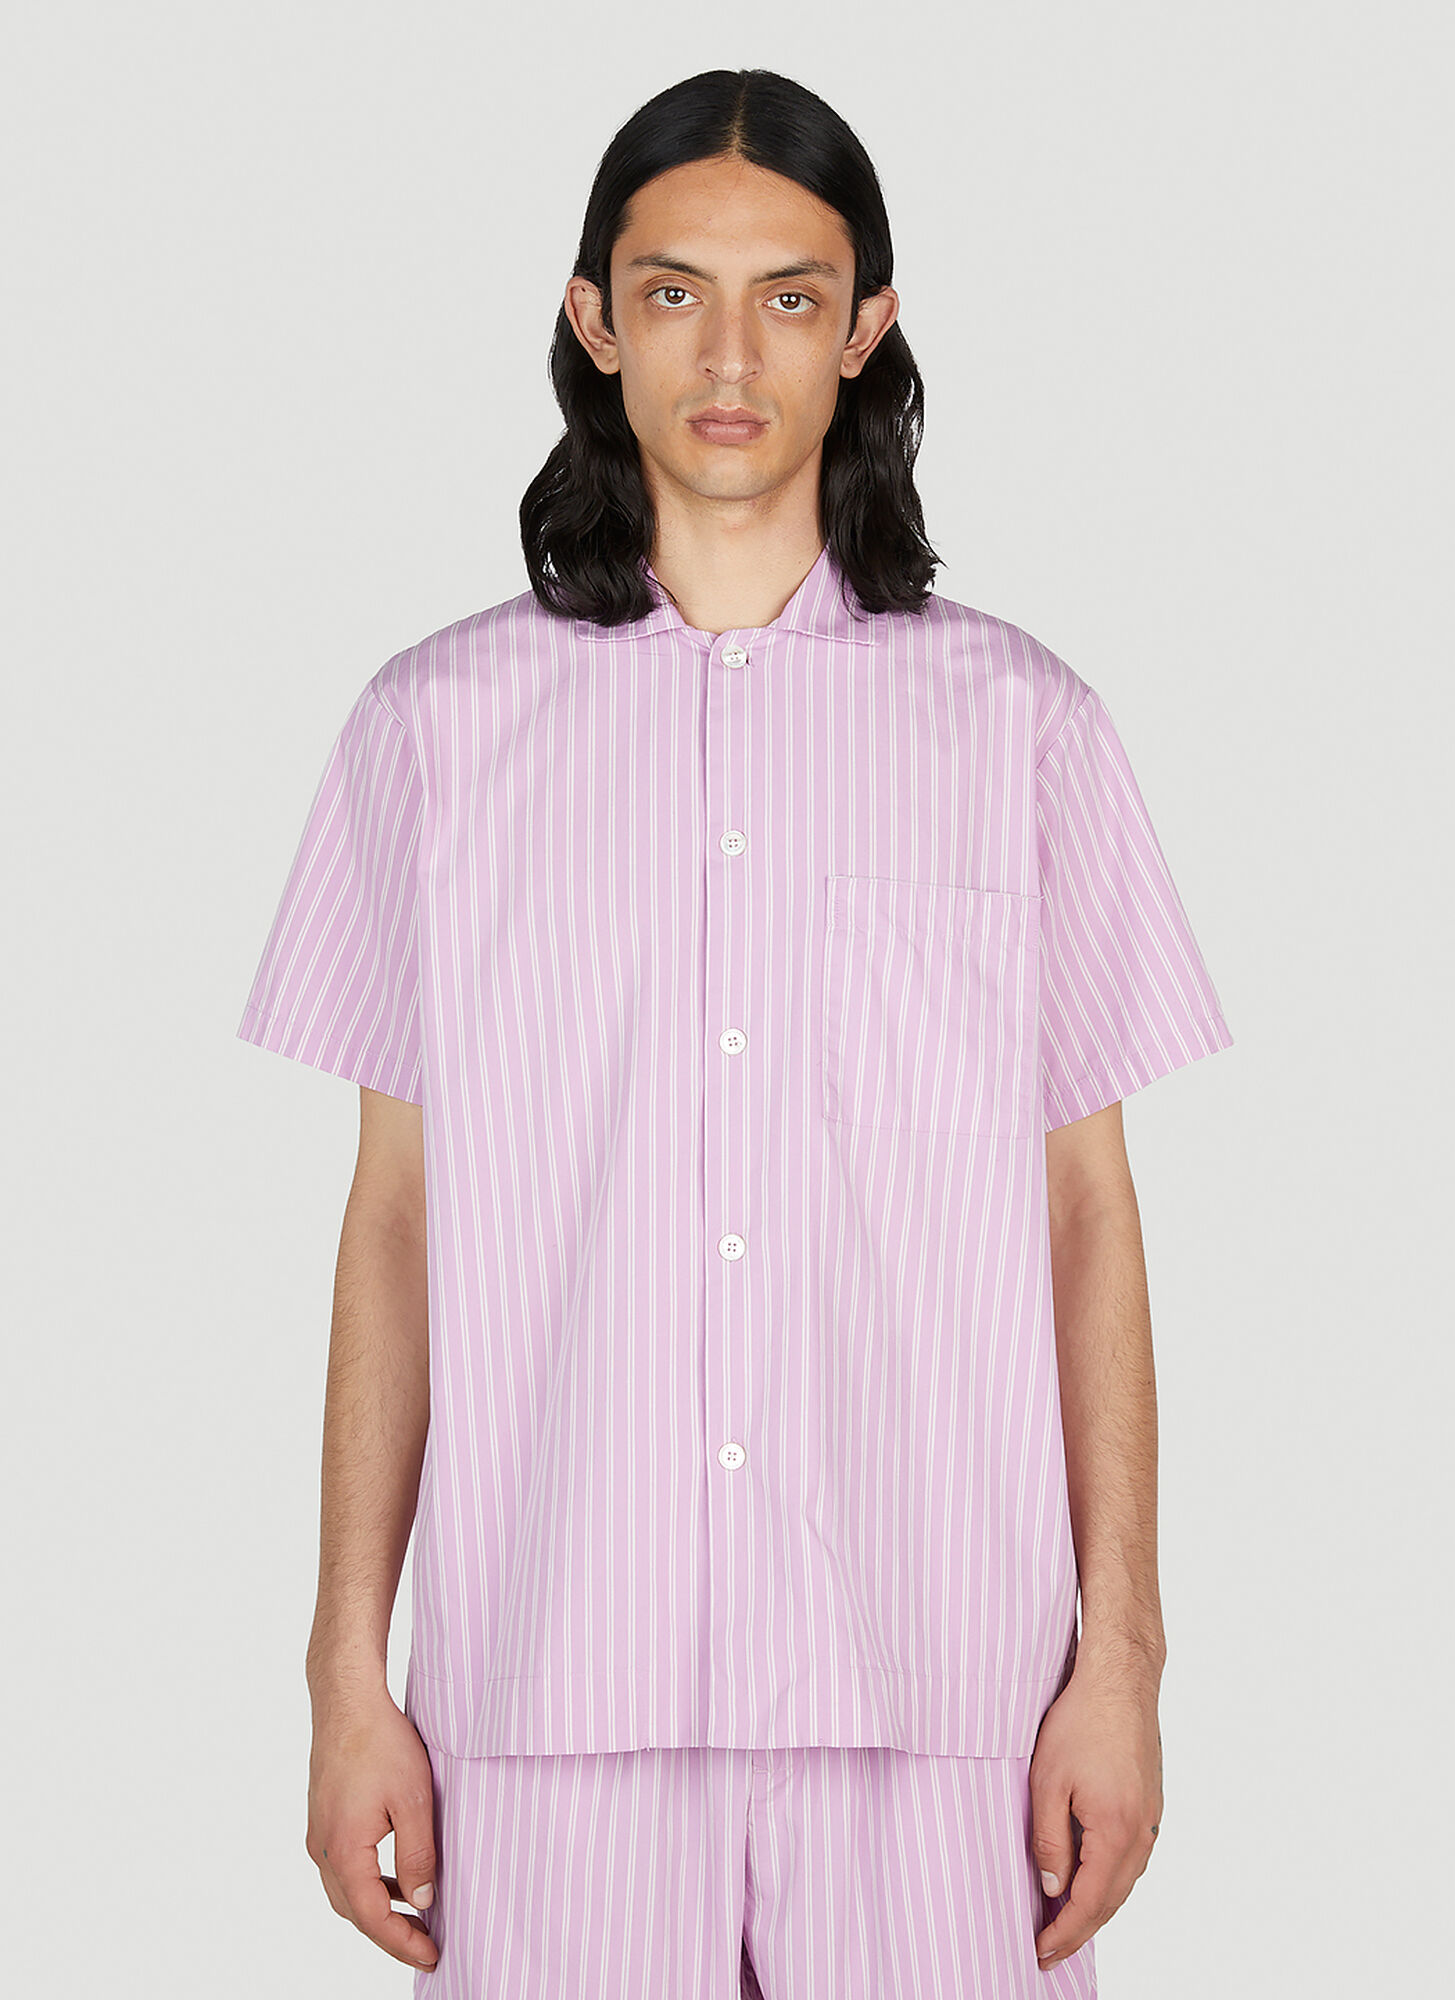 Tekla Skagen Stripes Shirt Unisex Pink